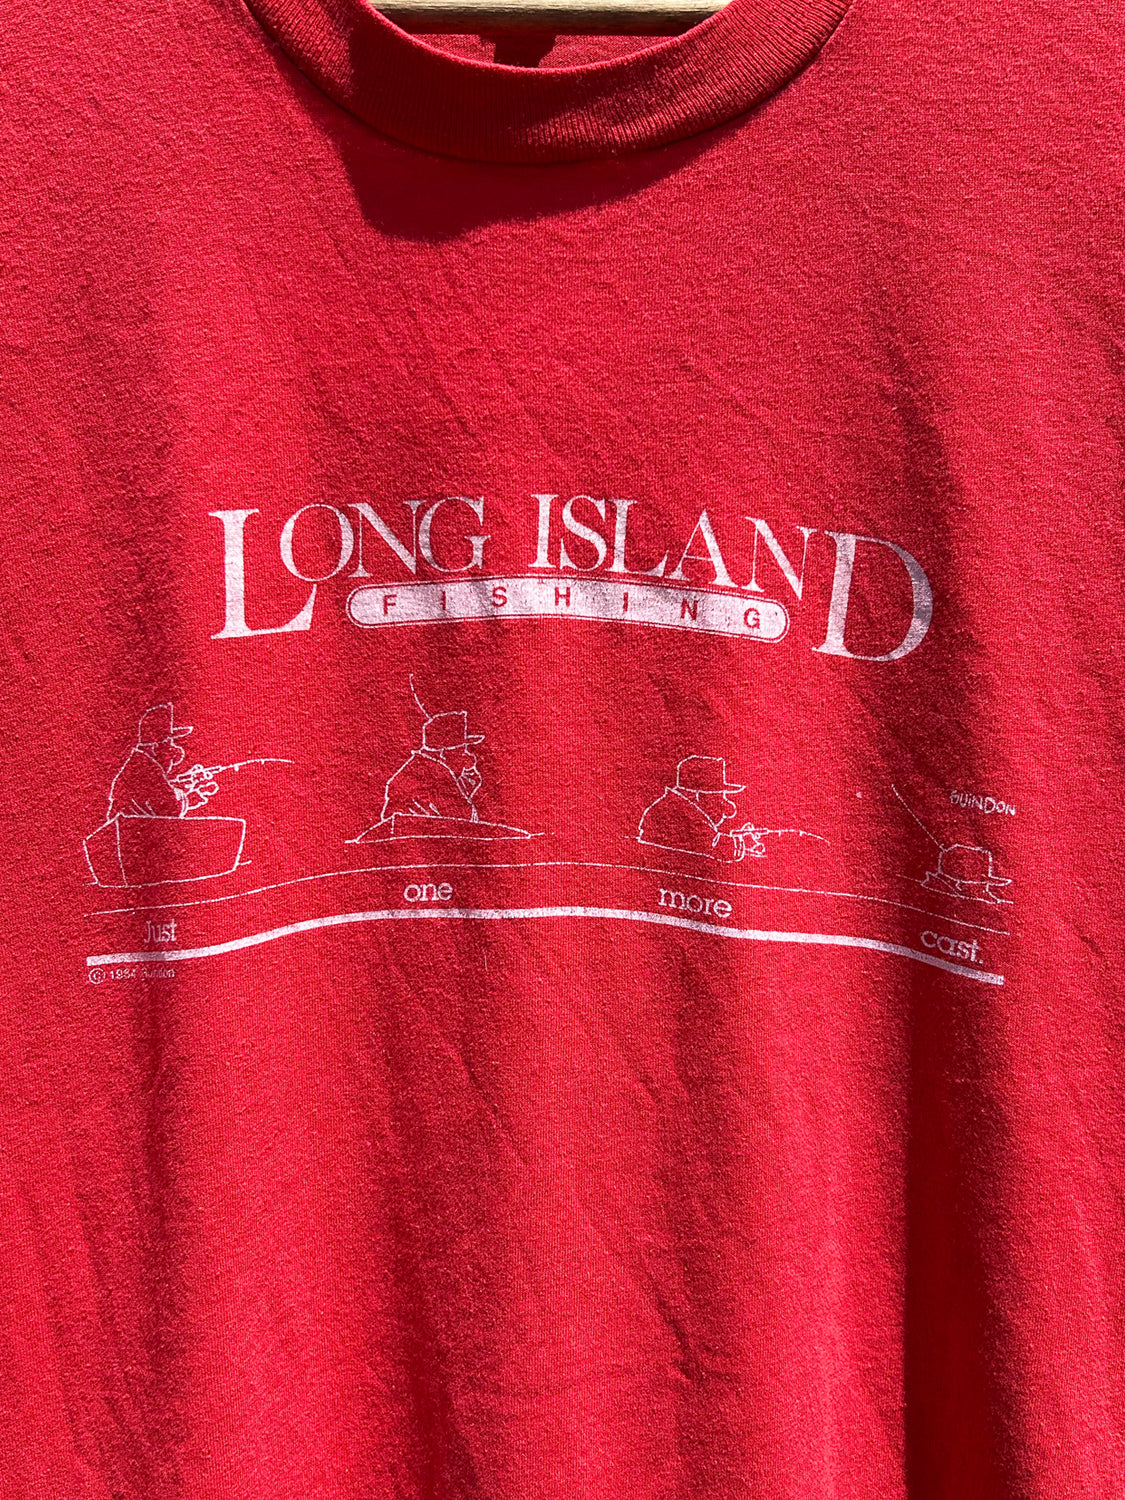 Long Island Fishing Tee - 1980s